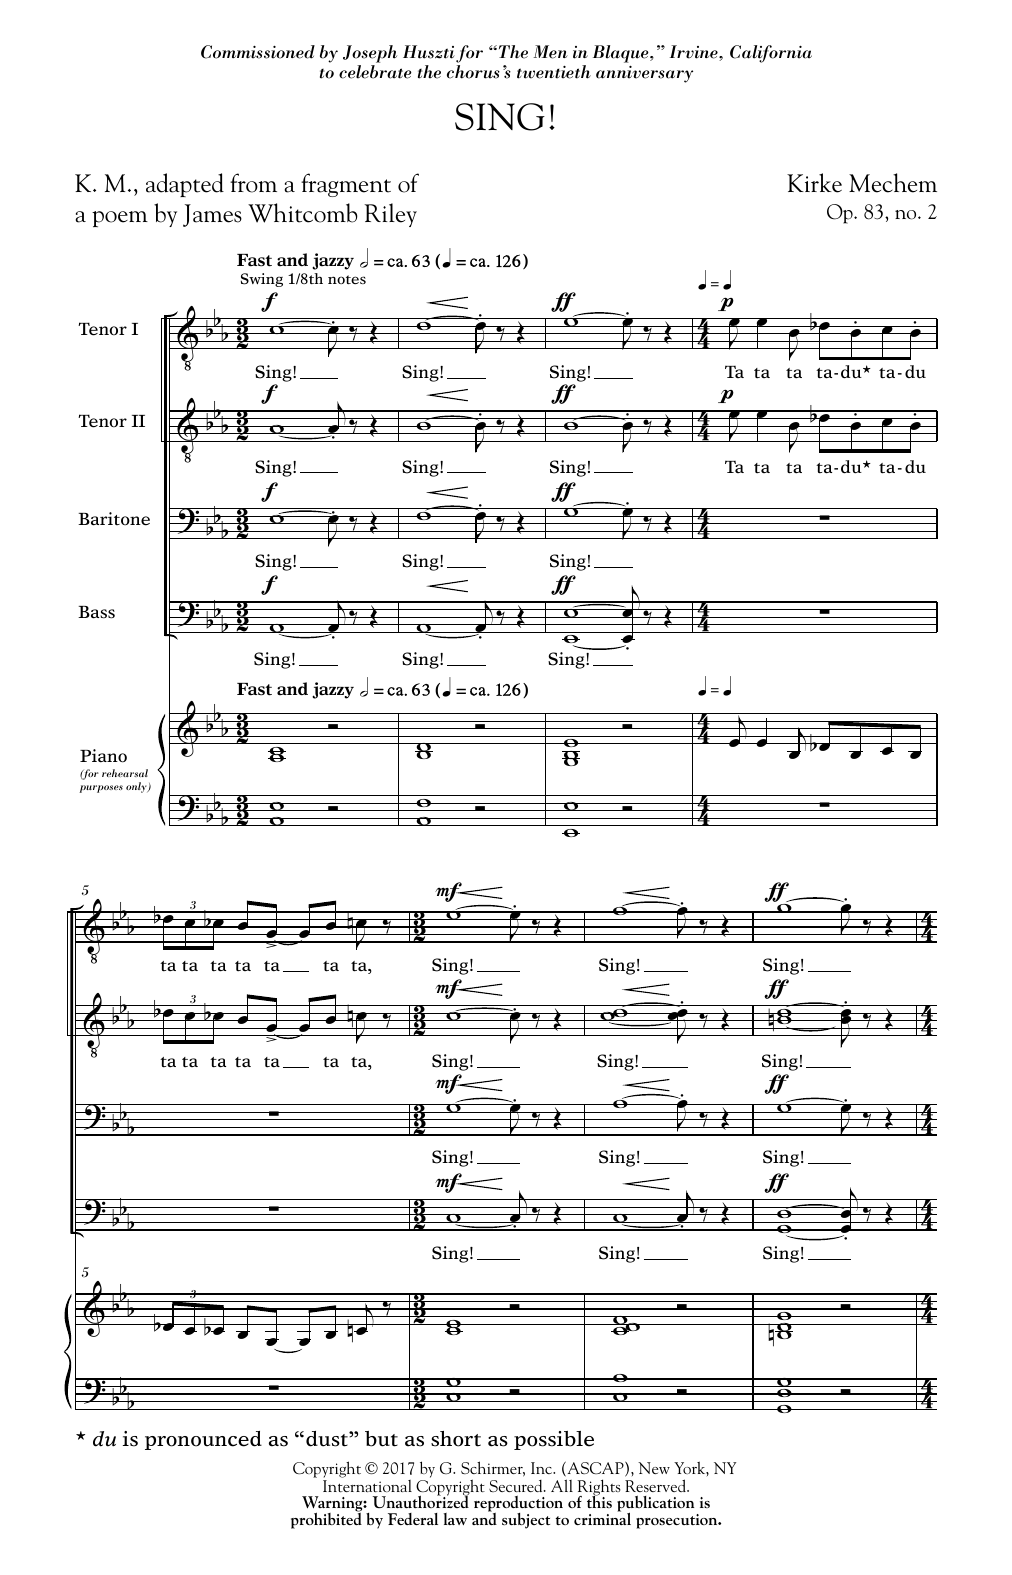 Kirke Mechem Sing! Sheet Music Notes & Chords for TTBB Choir - Download or Print PDF